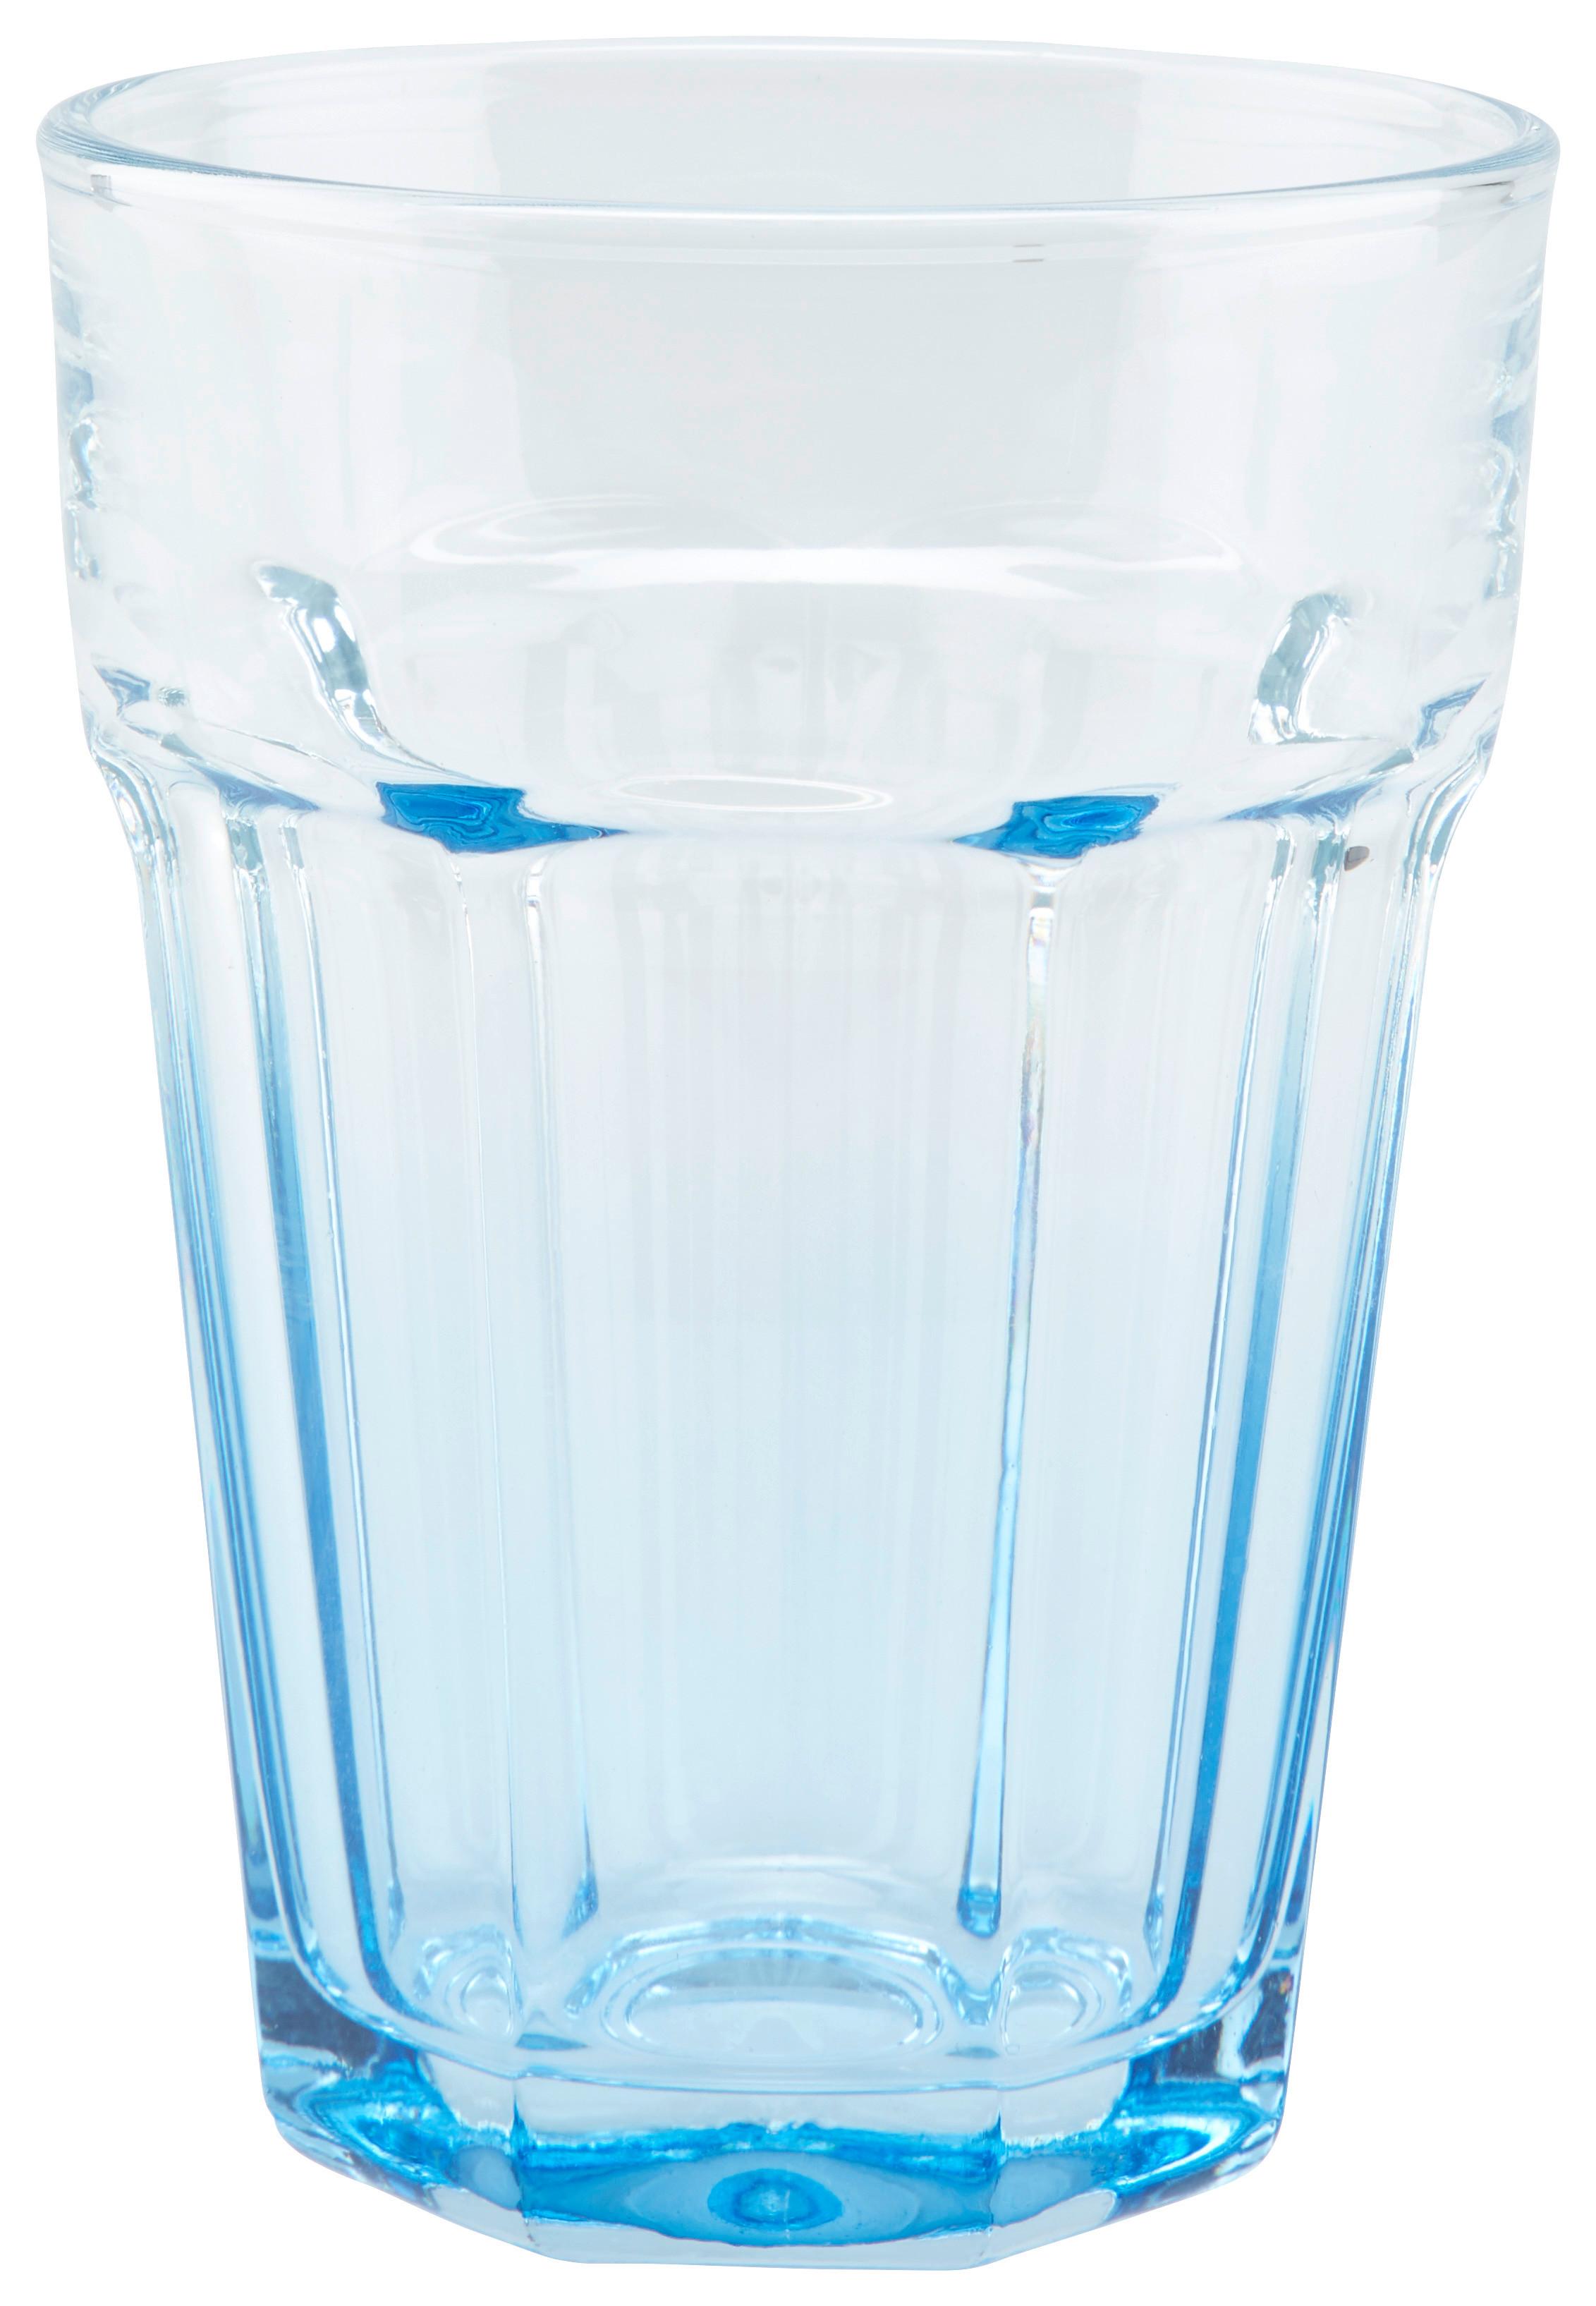 Trinkglas Blau Maren ca. 400 ml - Blau/Klar, Glas (9,2/12,8cm) - Luca Bessoni